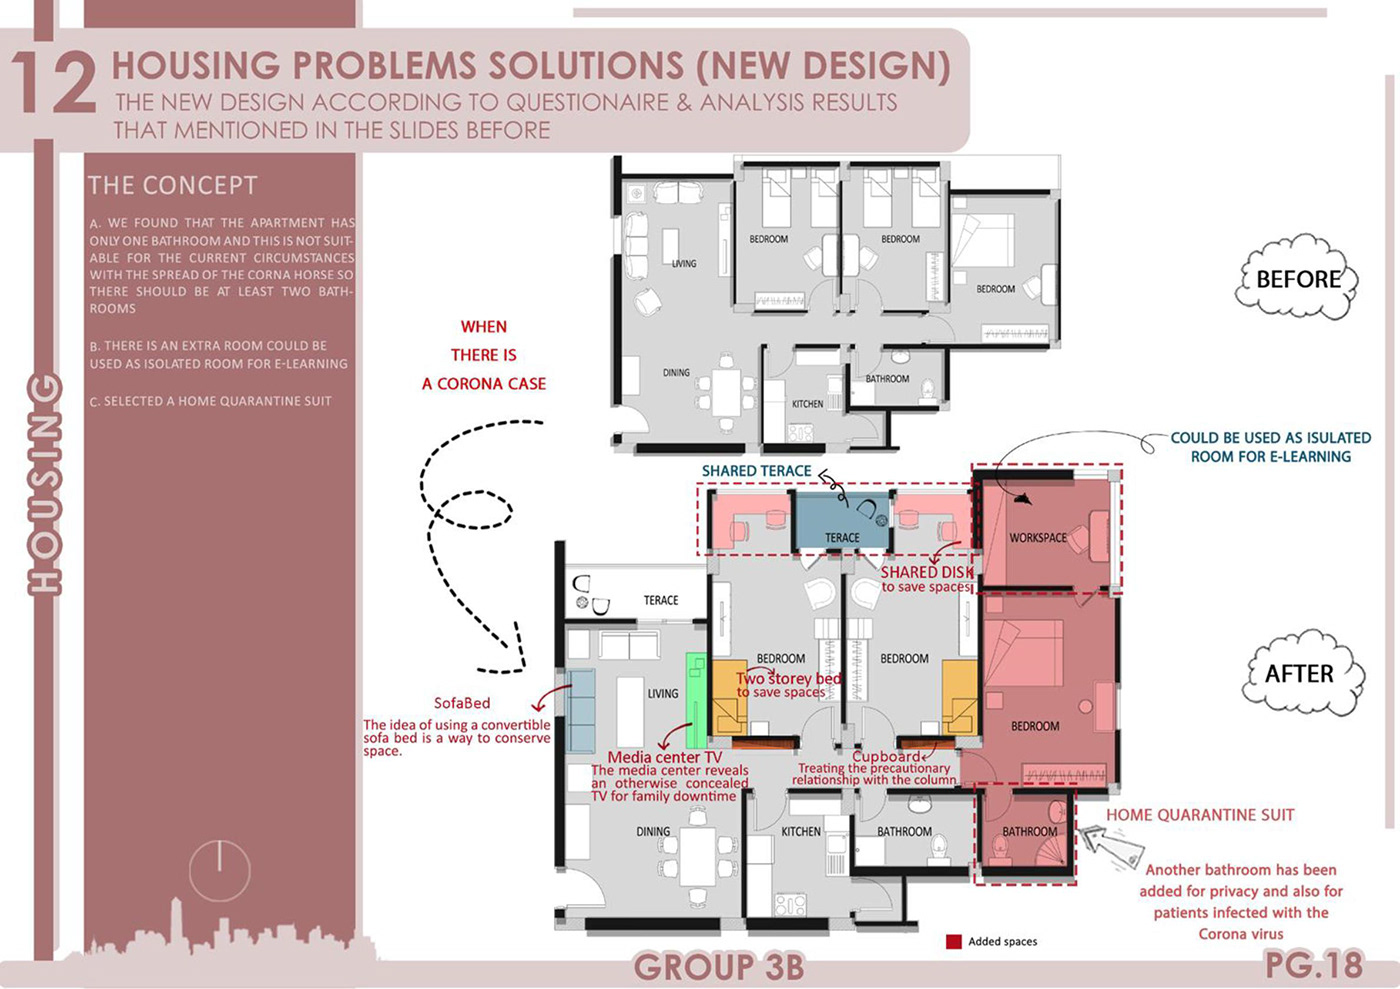 re-design redesign housing residential visualization architecture Render 3ds max exterior interior design 